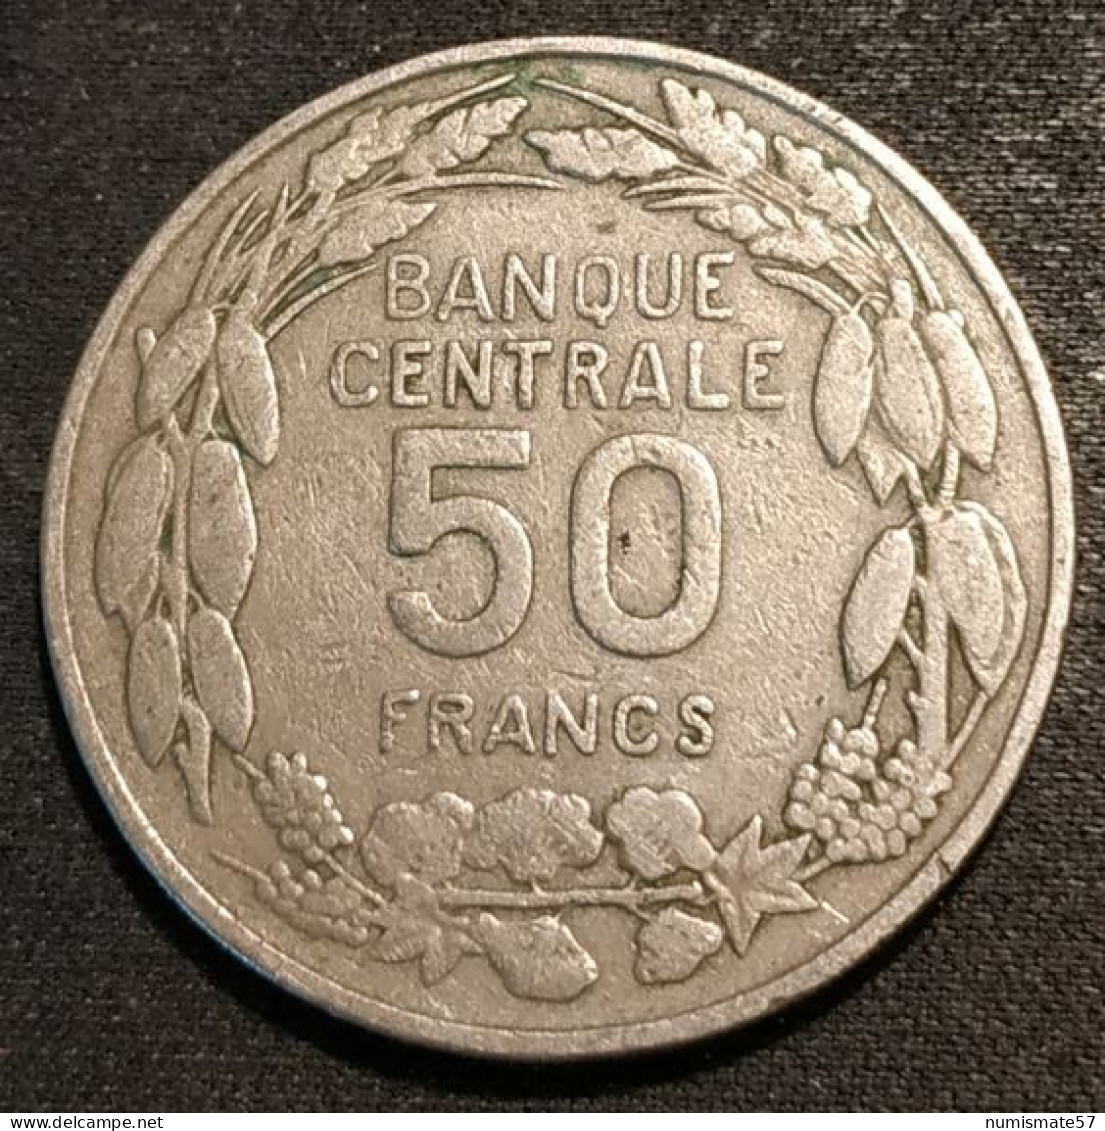 CAMEROUN - 50 FRANCS 1960 - KM 13 - ( 1er JANVIER 1960 - PAIX TRAVAIL PATRIE ) - Camerun